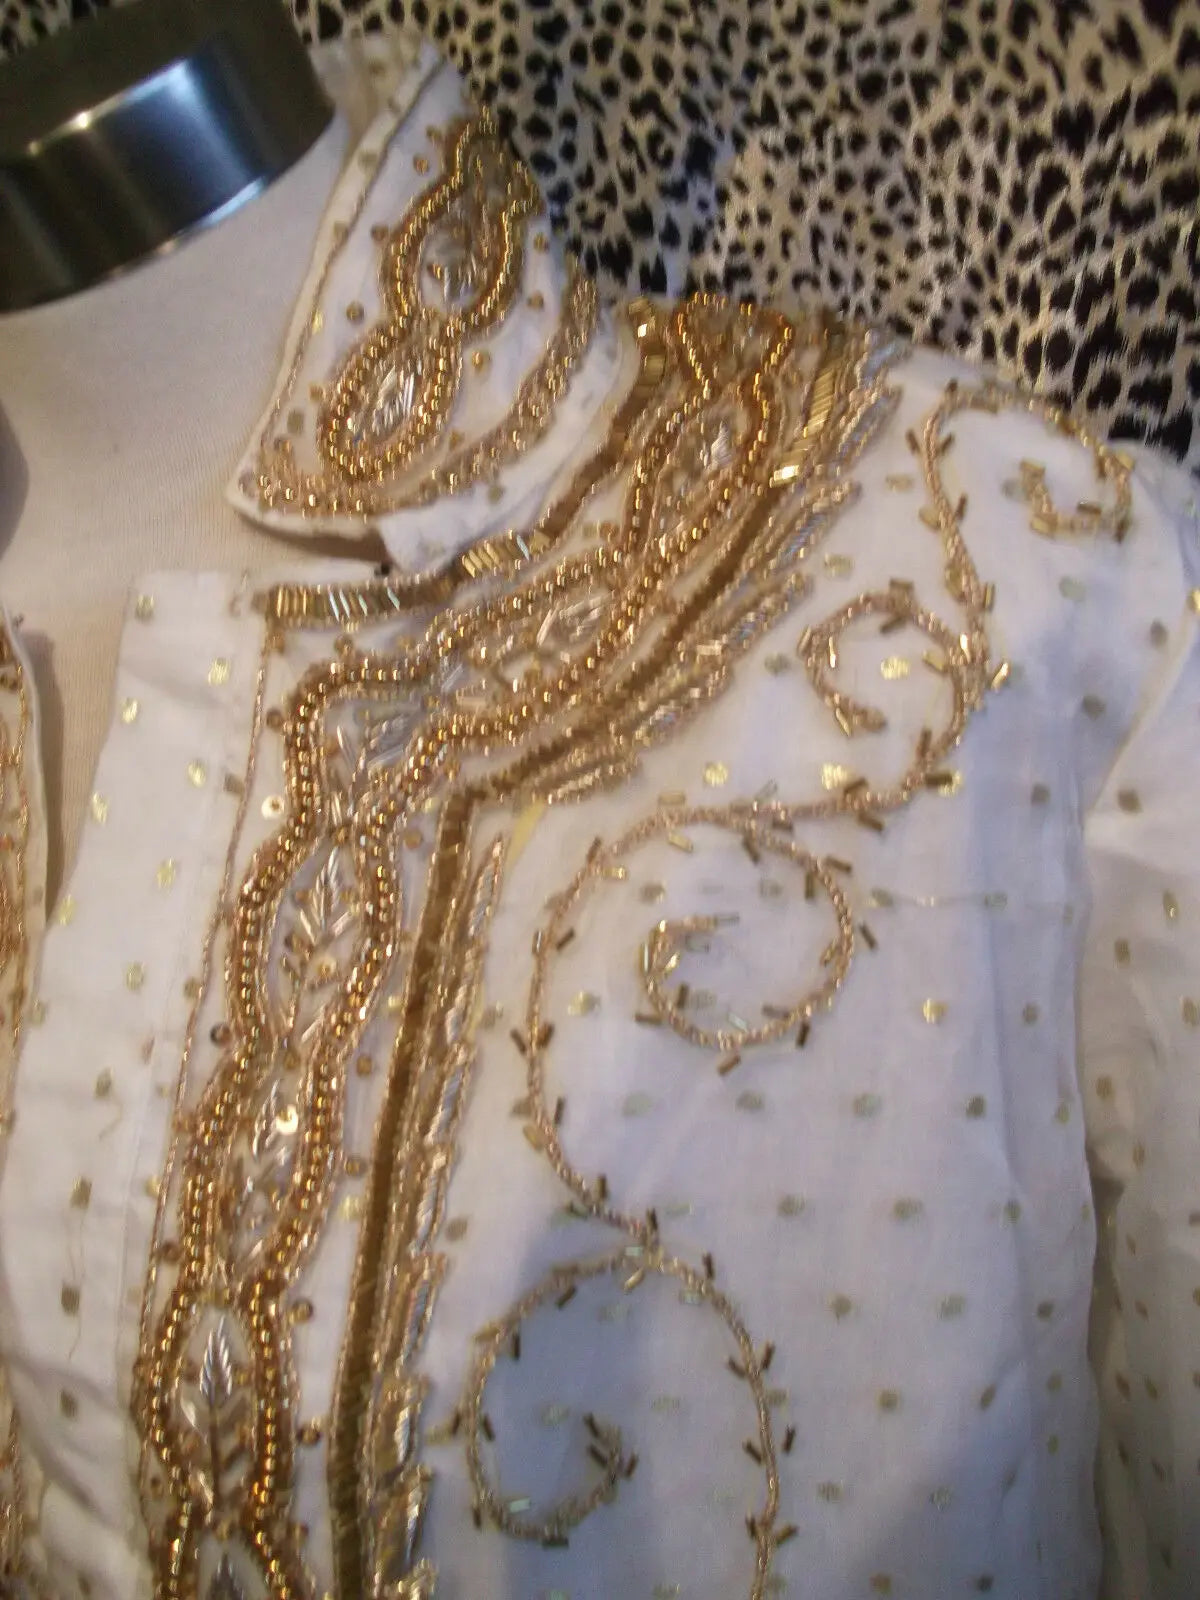 Indian wedding/ceremonial cream& gold polka dot shirt&skirt-gold beadwork detail Wonkey Donkey Bazaar